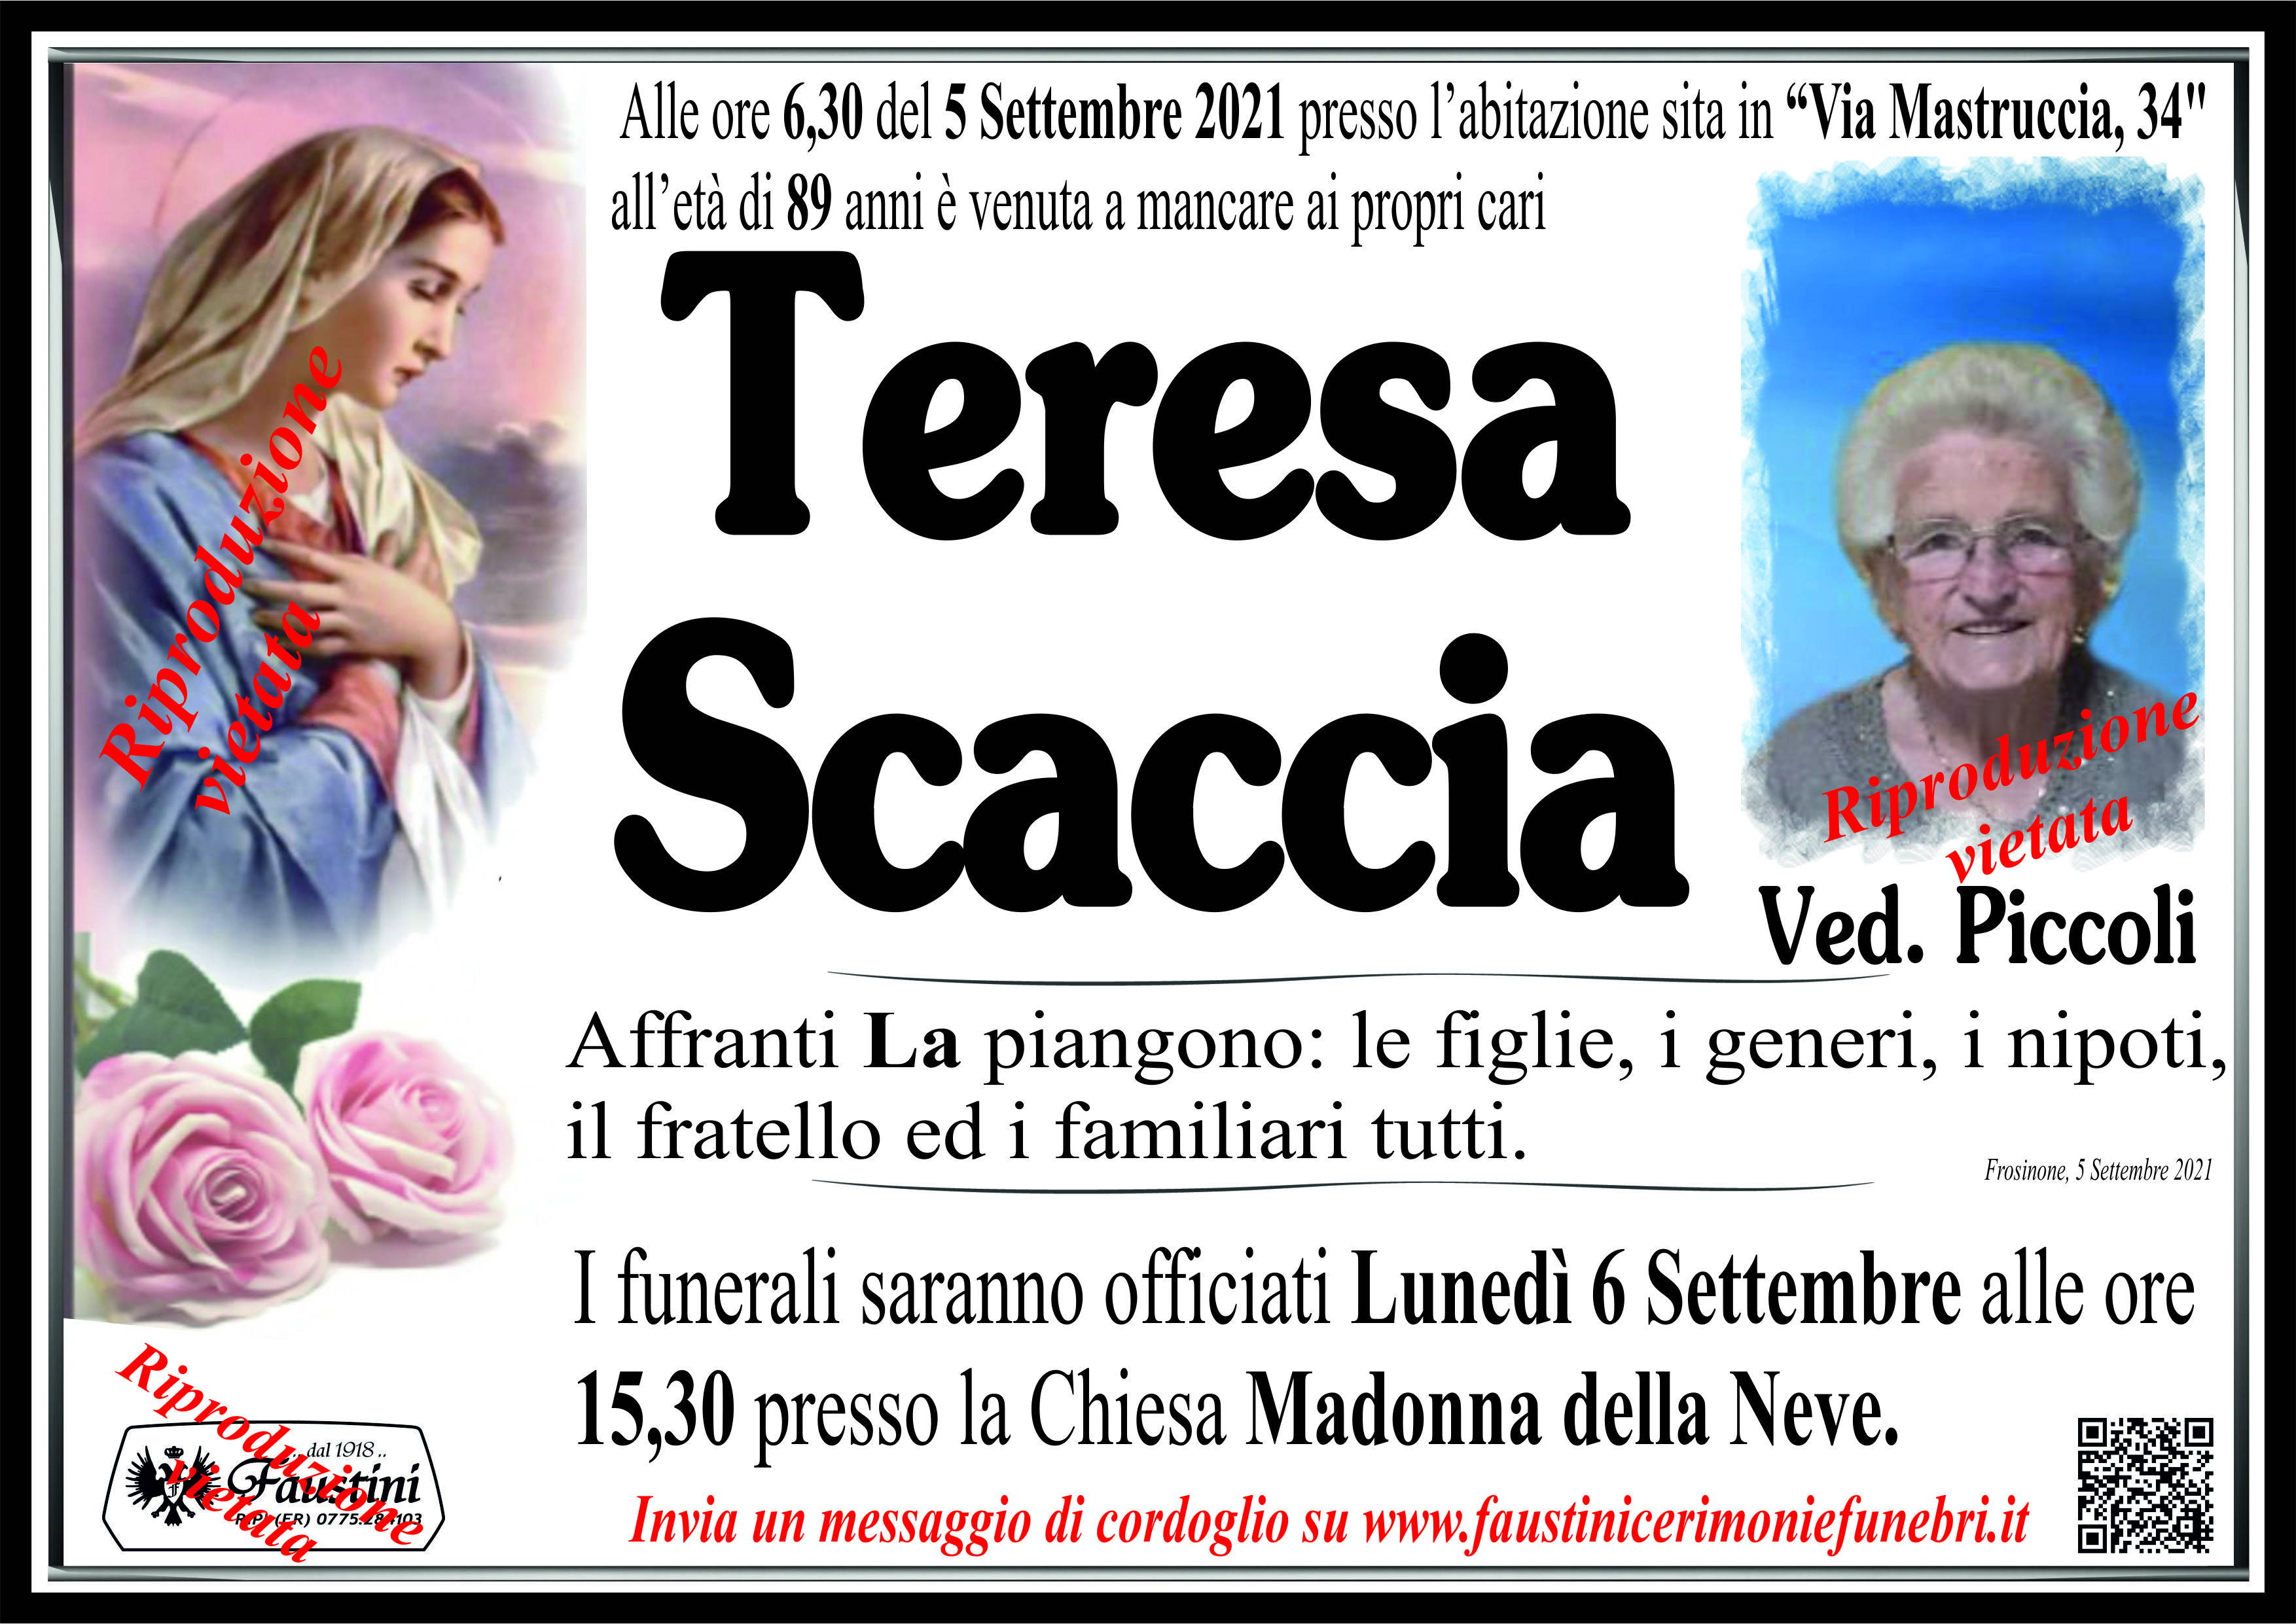 Teresa Scaccia